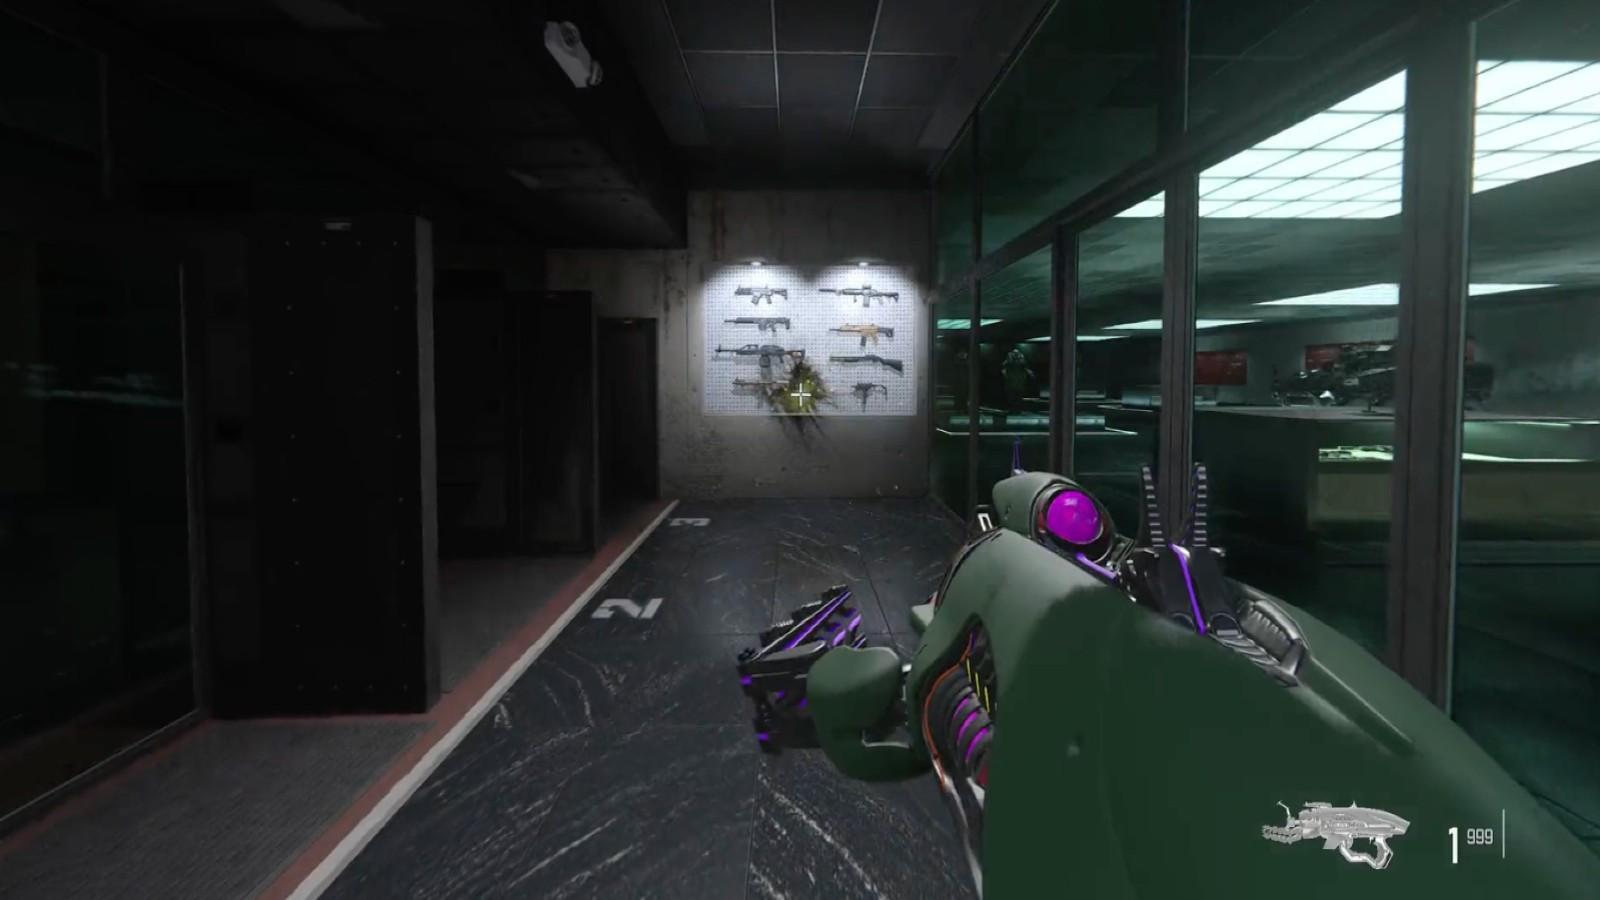 The VR-11 in Modern Warfare 3.